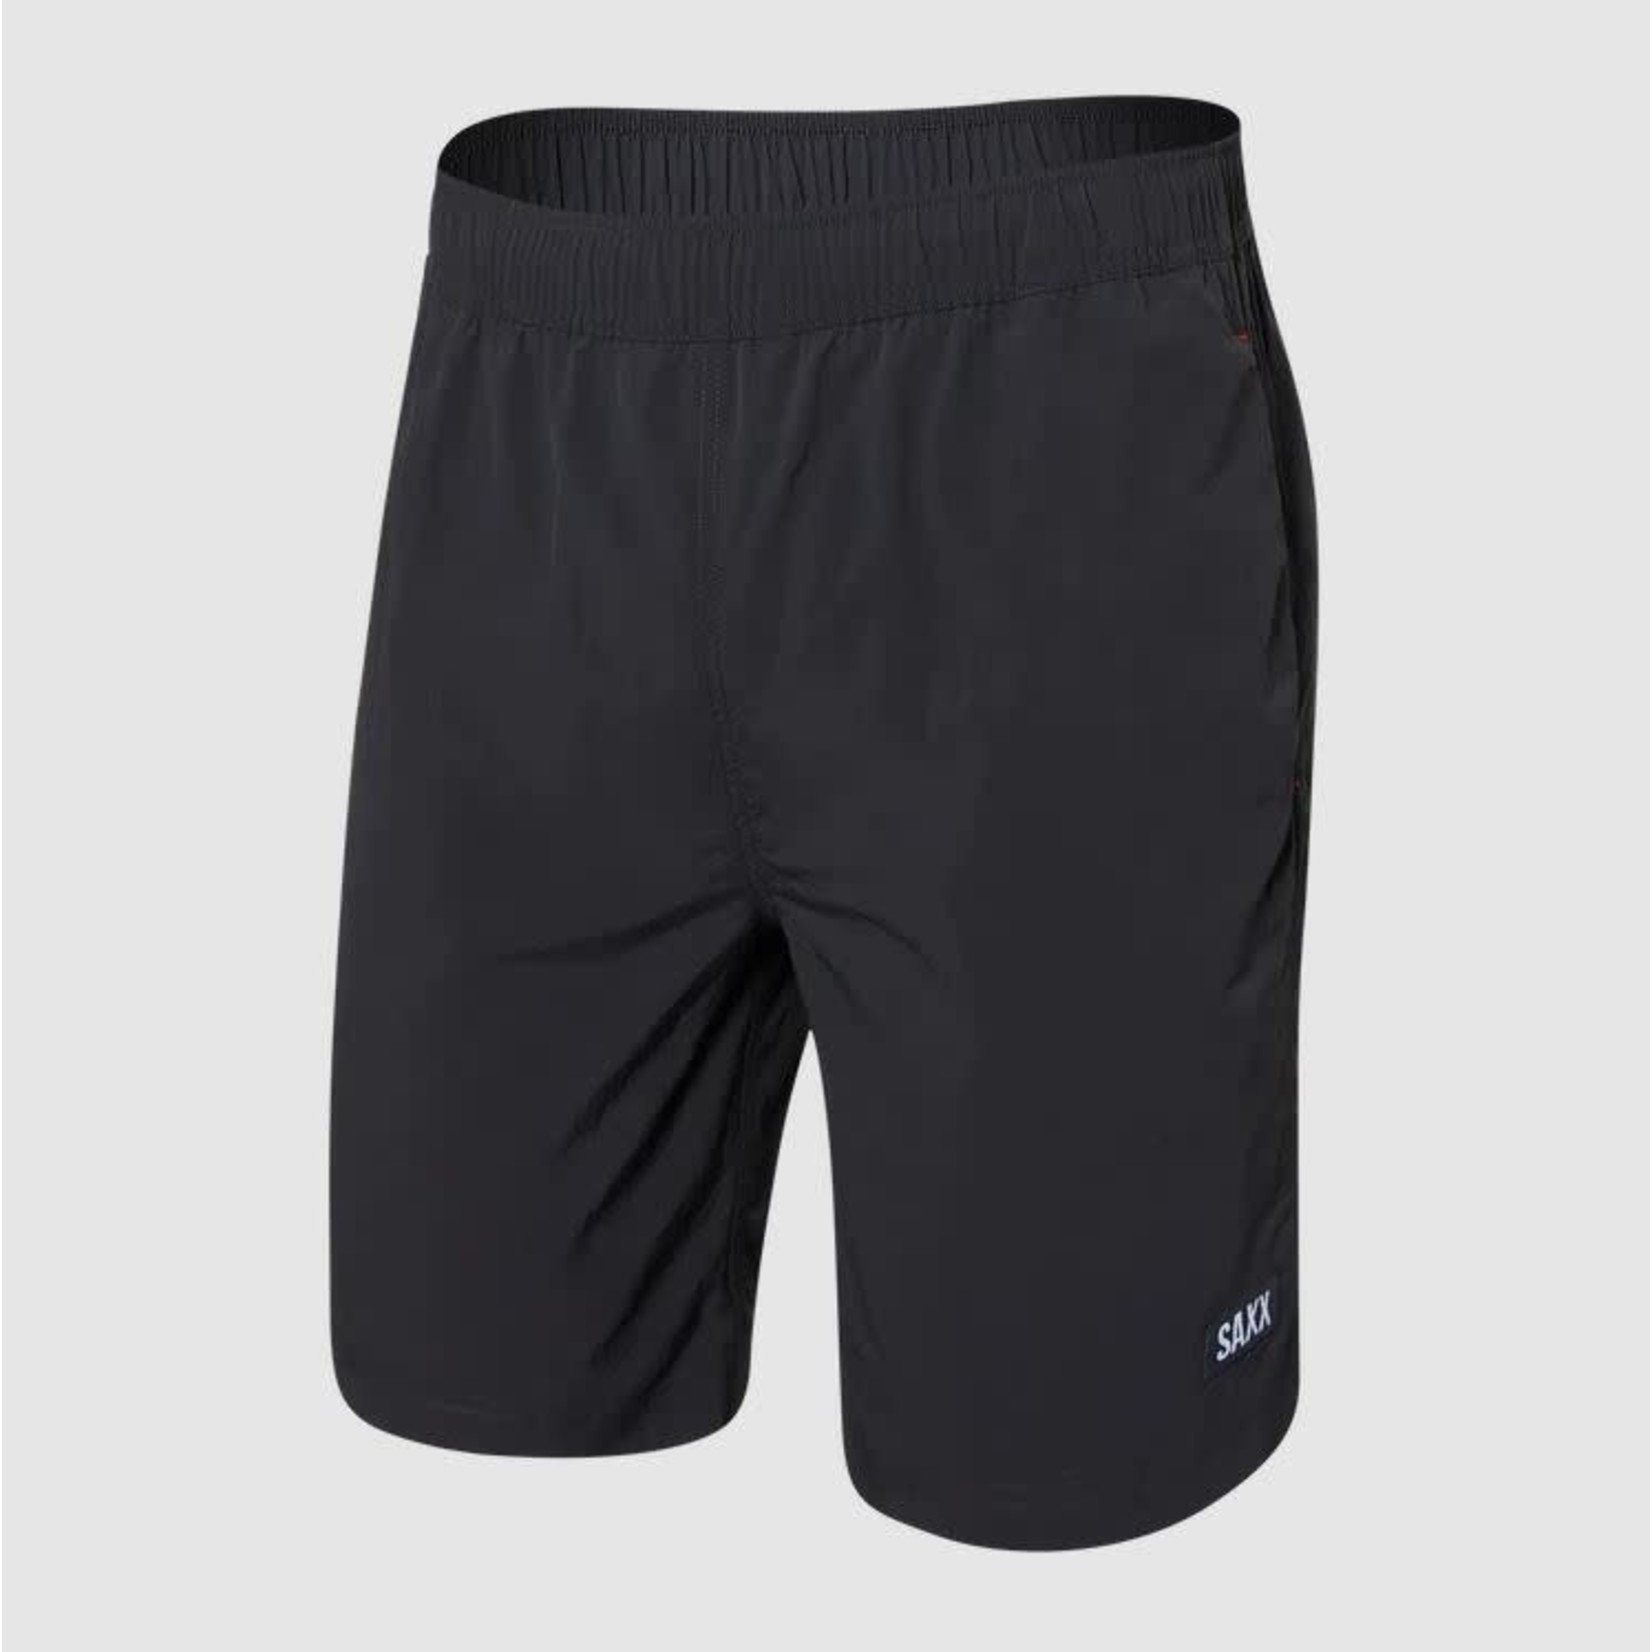 SAXX Go Coastal 2in1 7" Volley Shorts